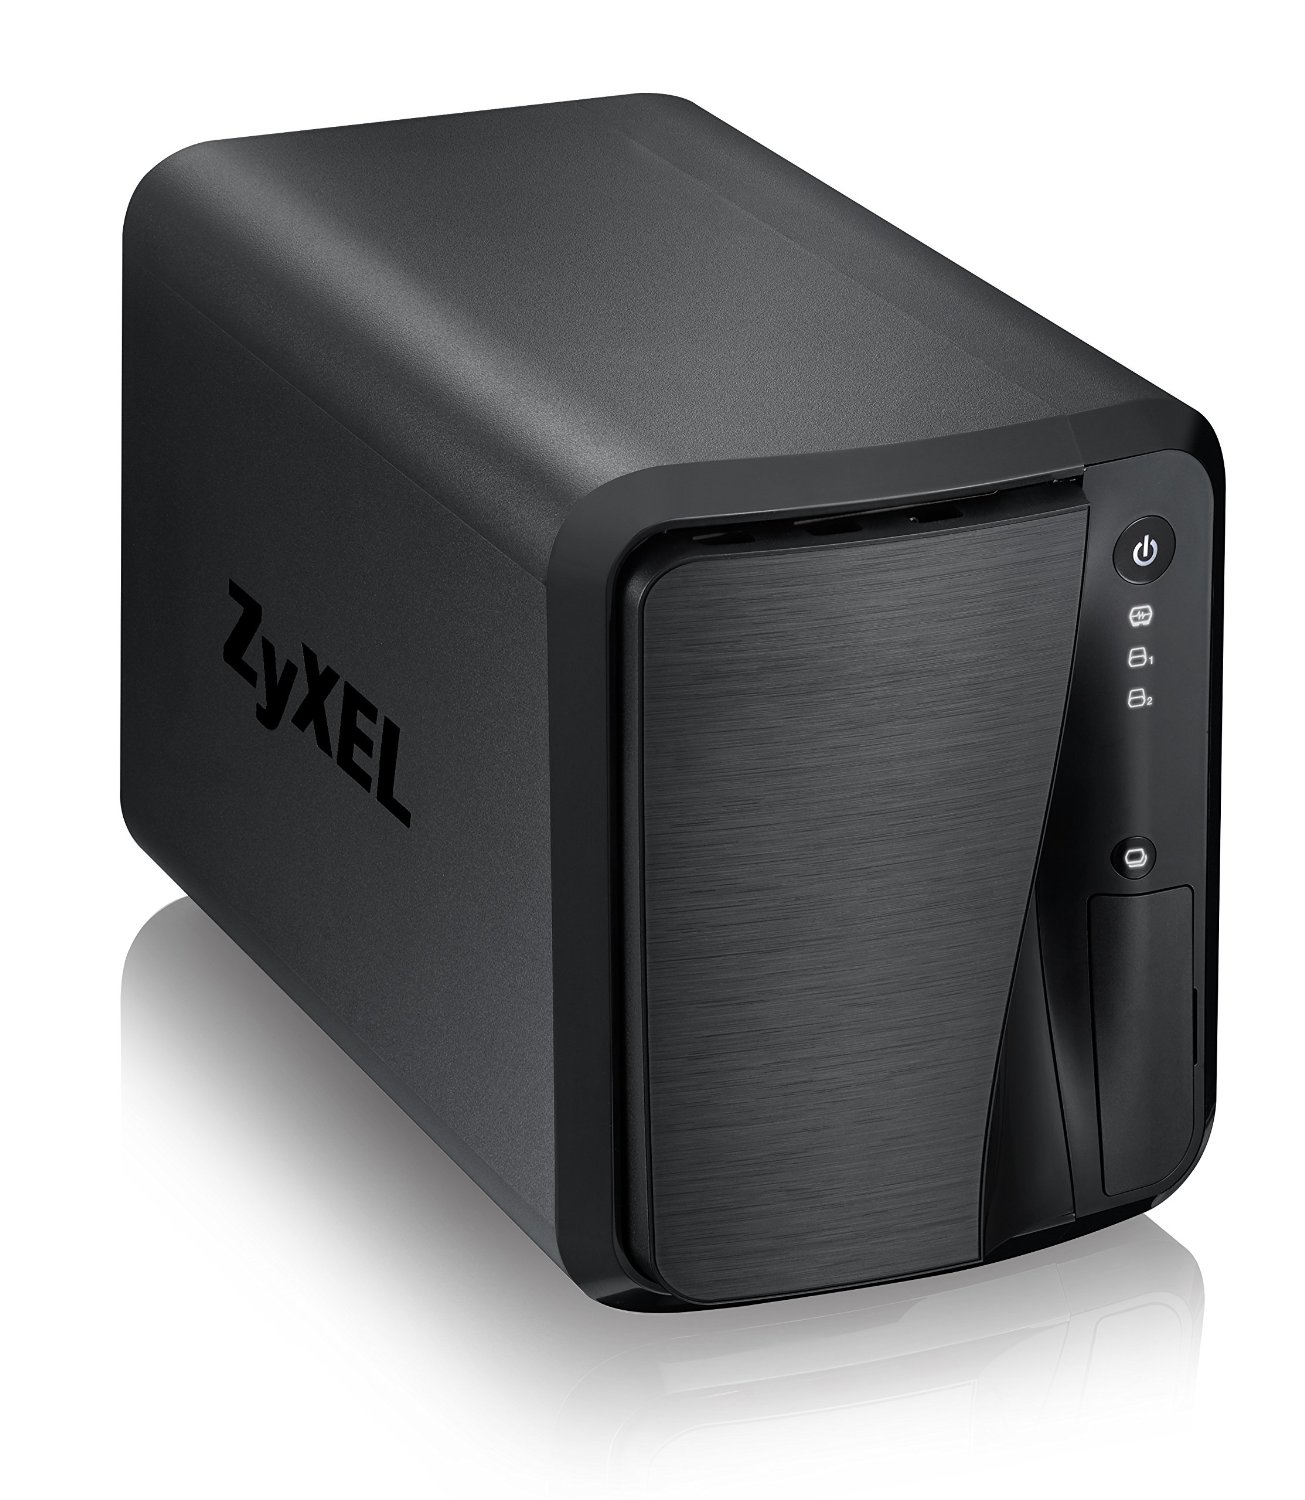 Zyxel NAS520 2 Bay Personal Cloud NAS Storage (1.2 GHz Dual-Core CPU) 1